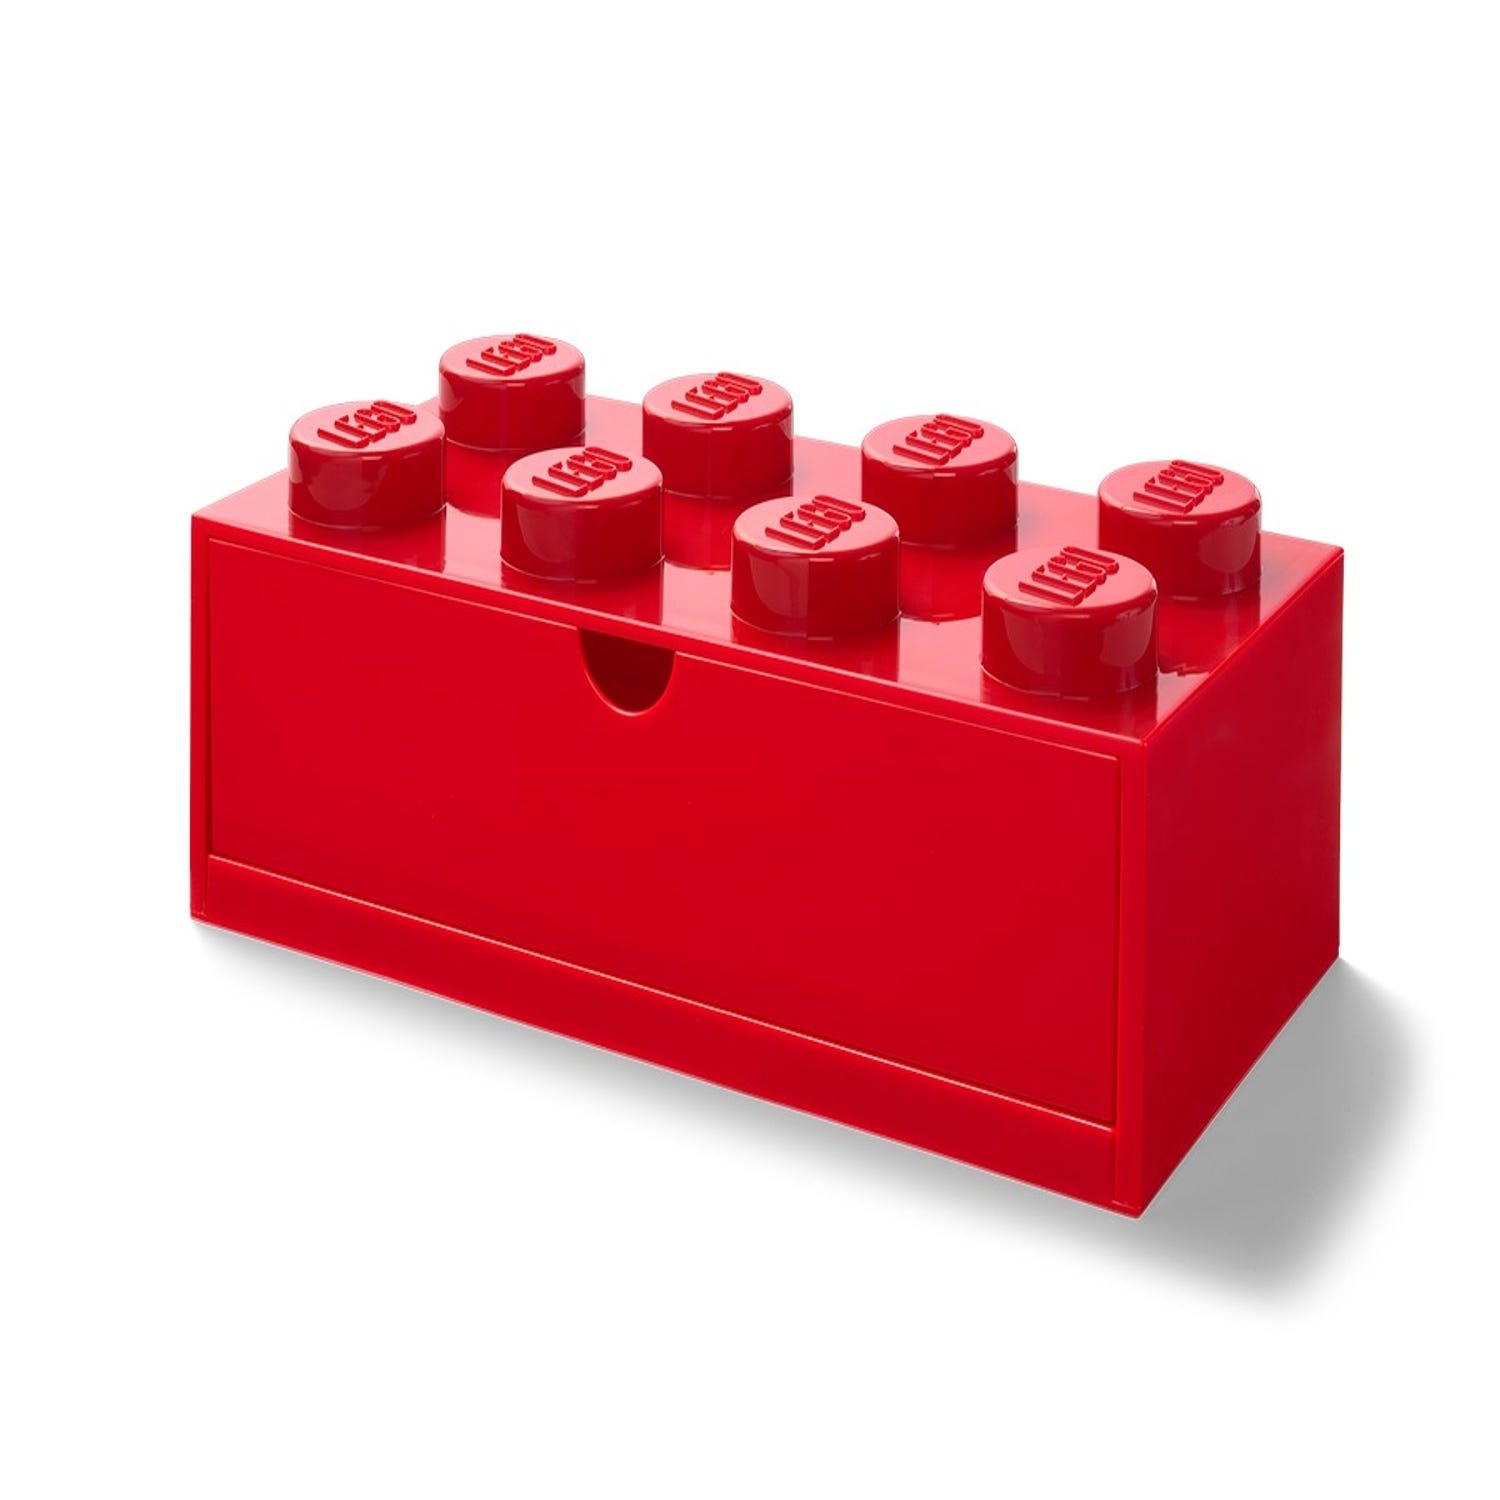 LEGO Storage Products: 40211740 8-Stud Desk Drawer Medium St